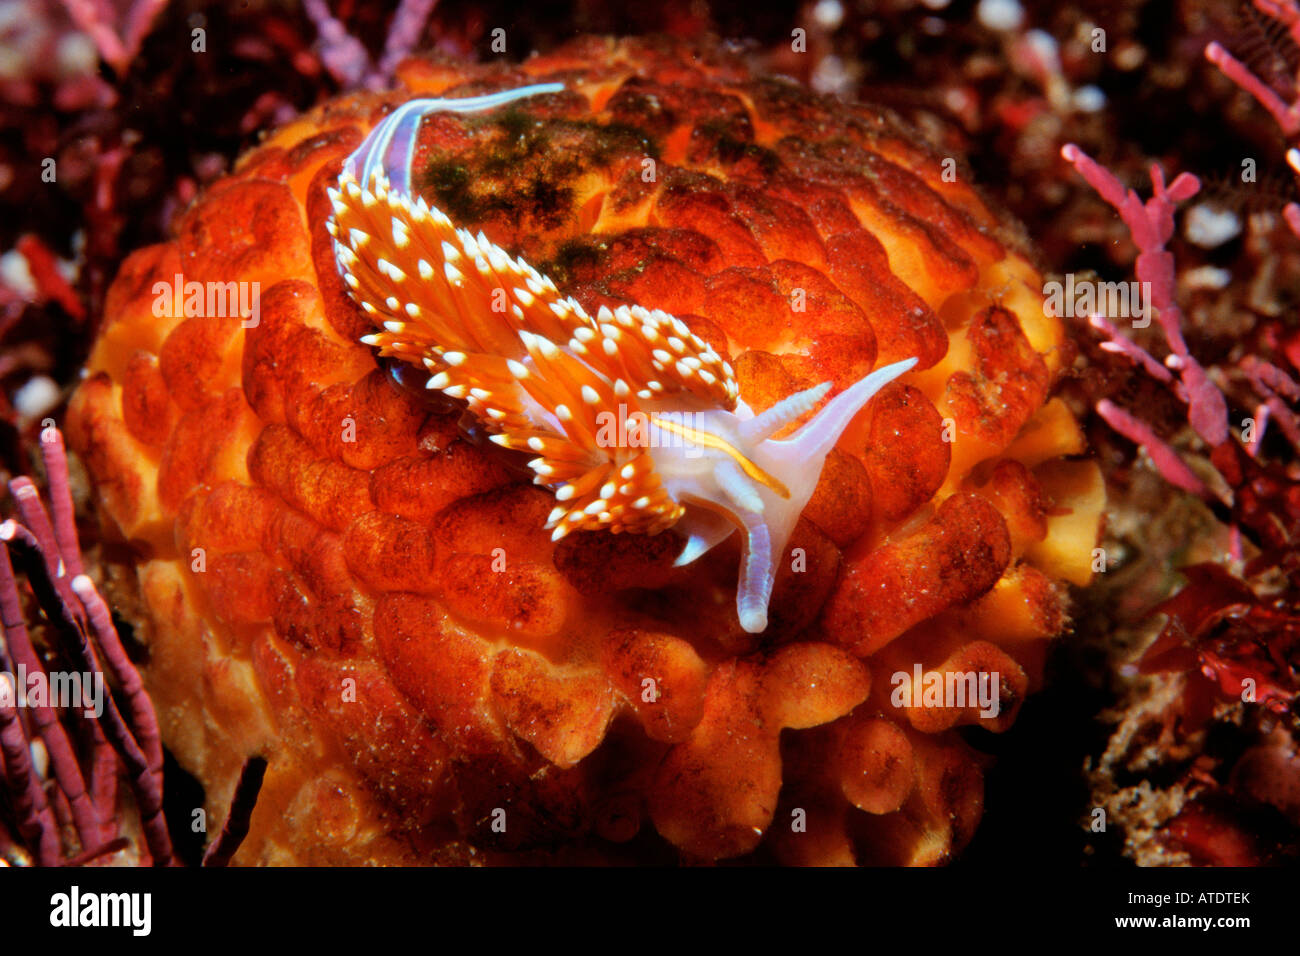 Dicken gehörnten Aeolid Hermissenda Crassicornis California Pacific Ocean Stockfoto